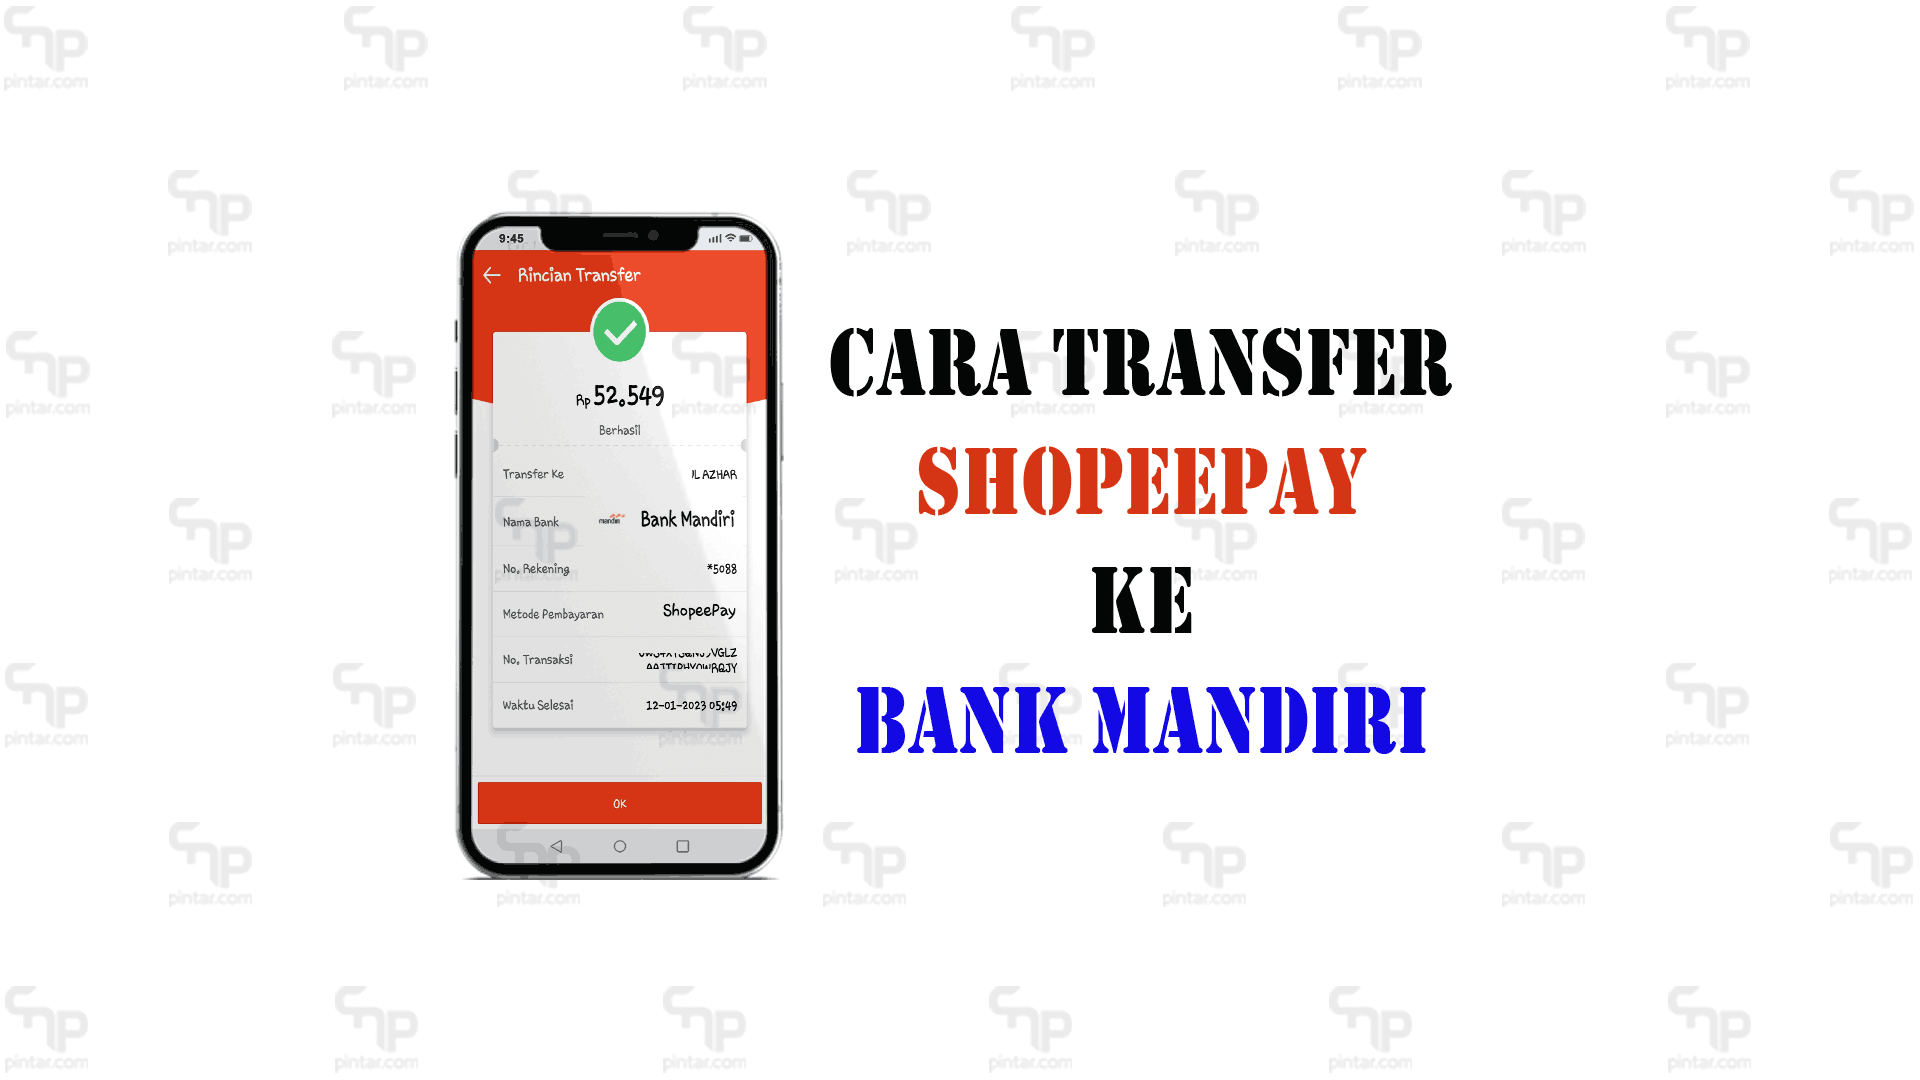 Cara-transfer-shopeepay-ke-mandiri